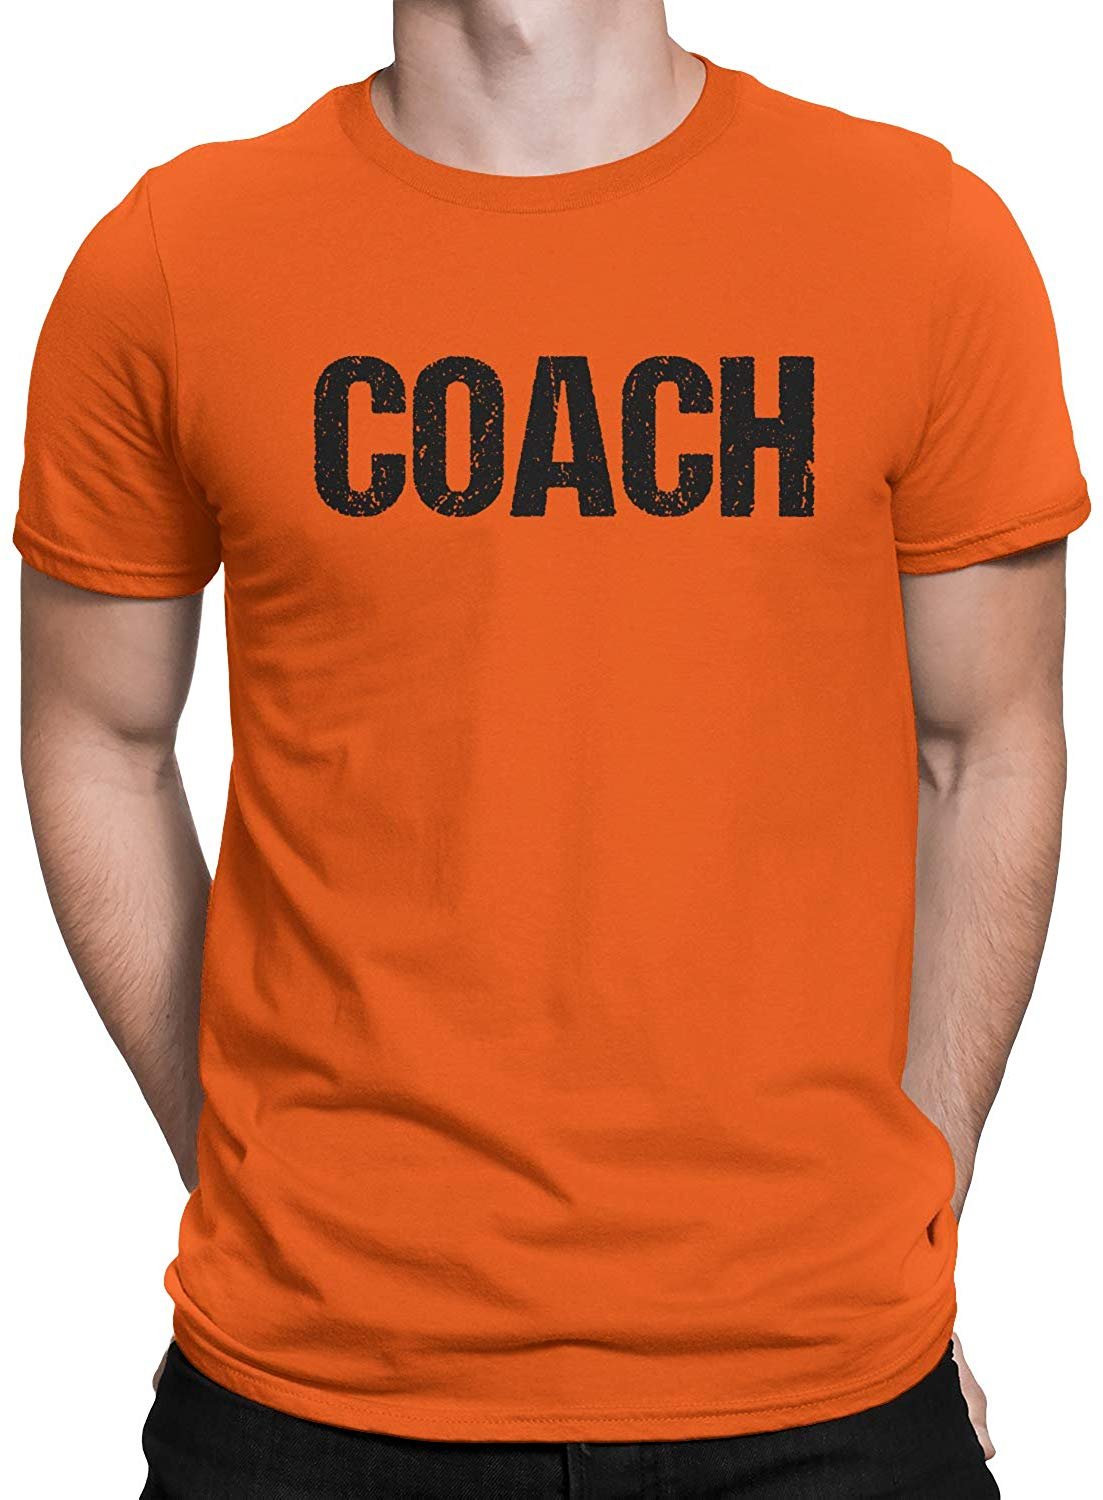 Coach T-Shirt Sports Coaching Tee Shirt (Orange & Black, Distressed)